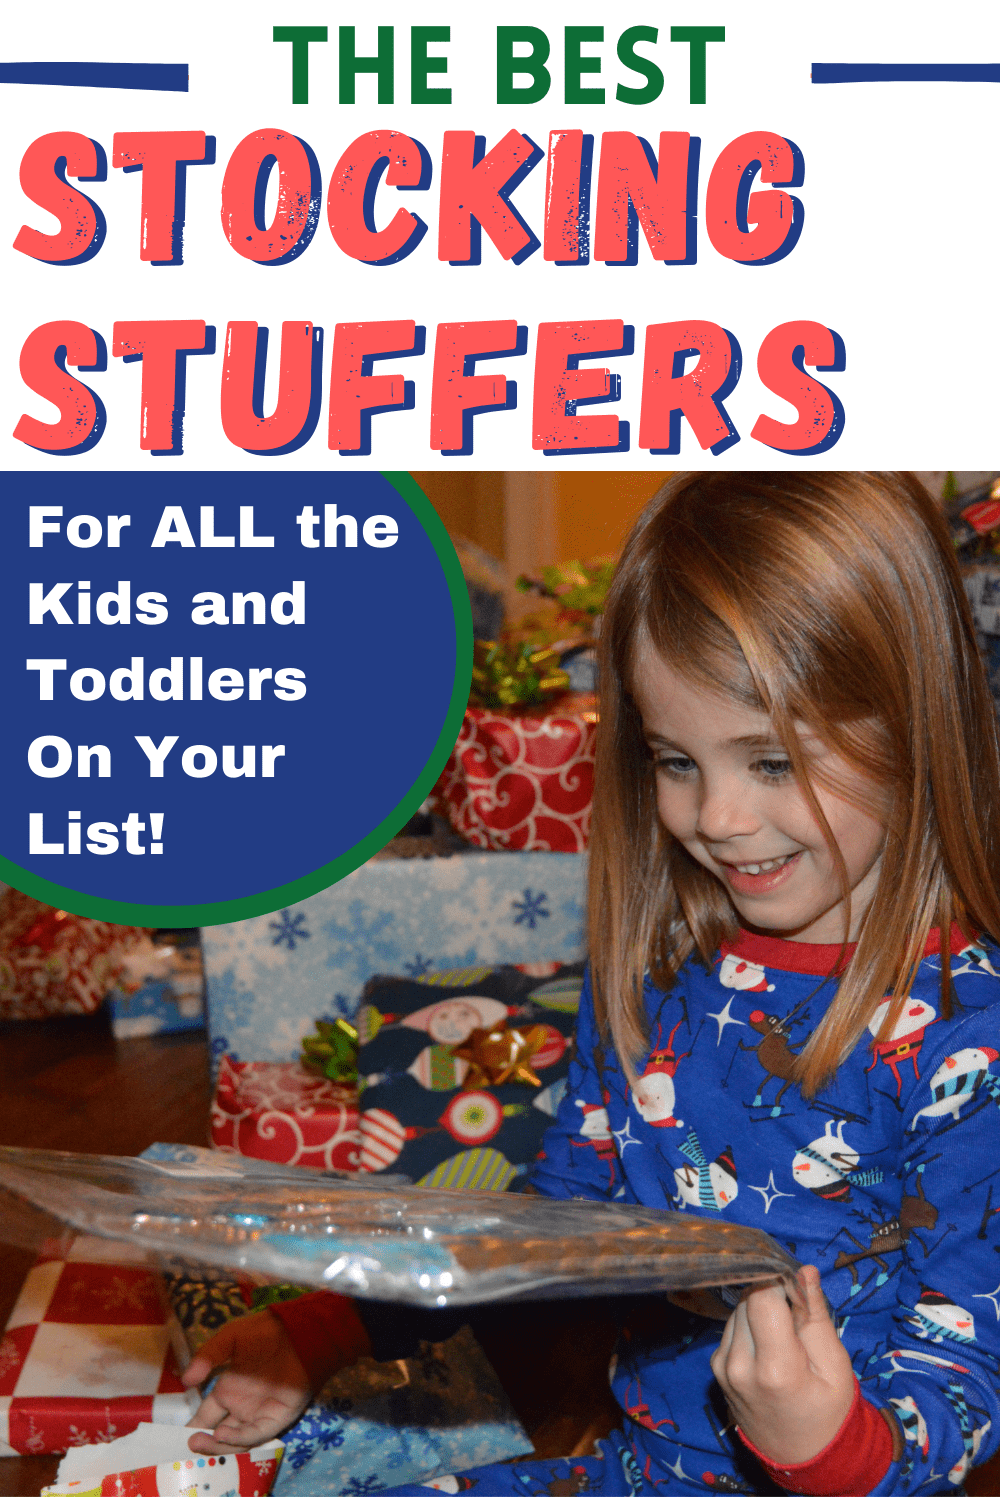 The Best Stocking Stuffer Ideas for Kids